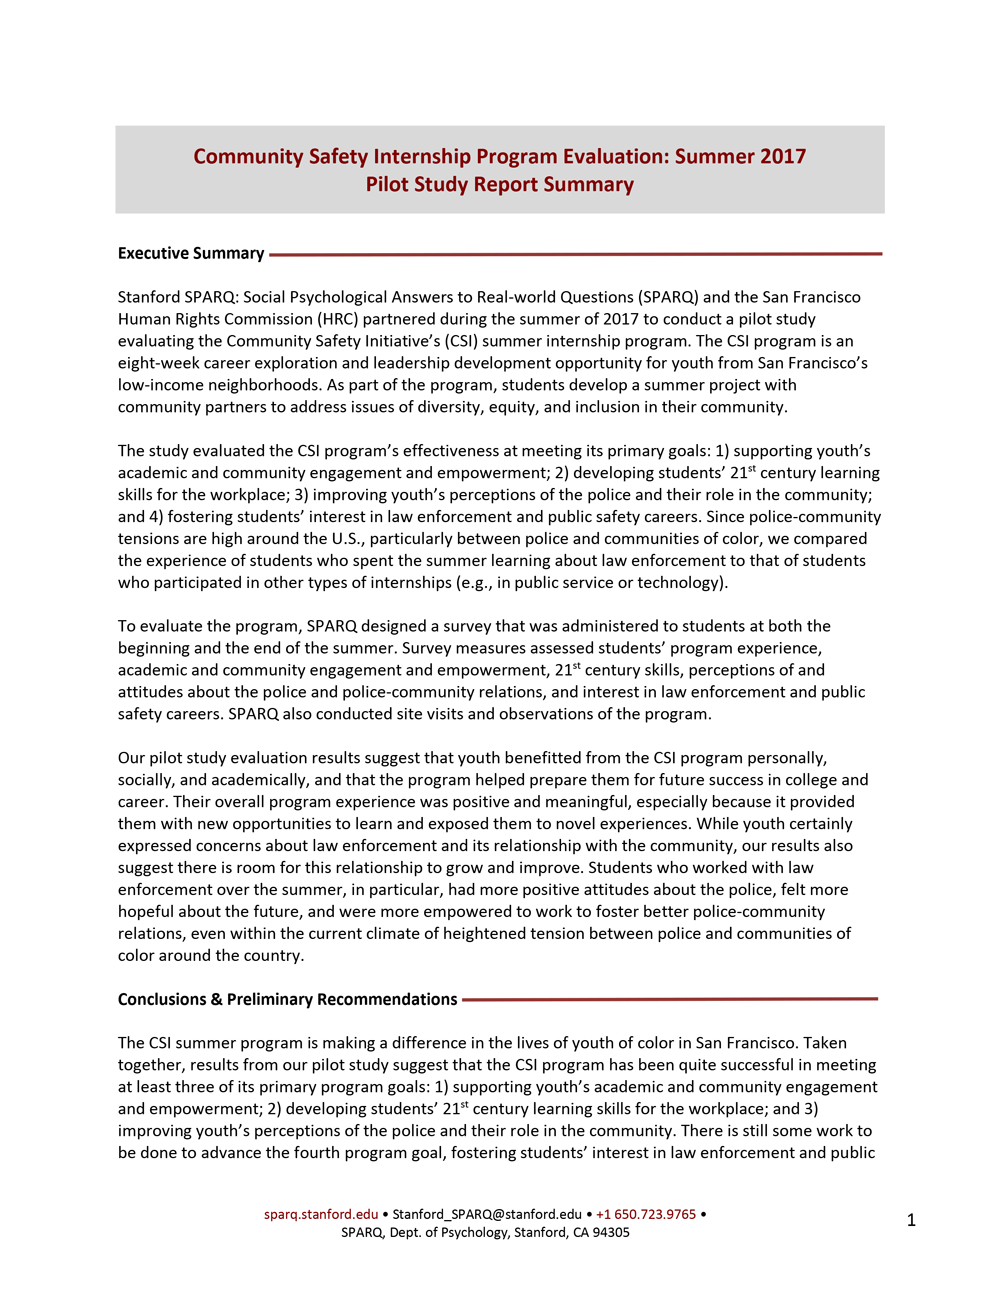 CSI Internship Program Evaluation - Summer 2017 Pilot Study Report Summary